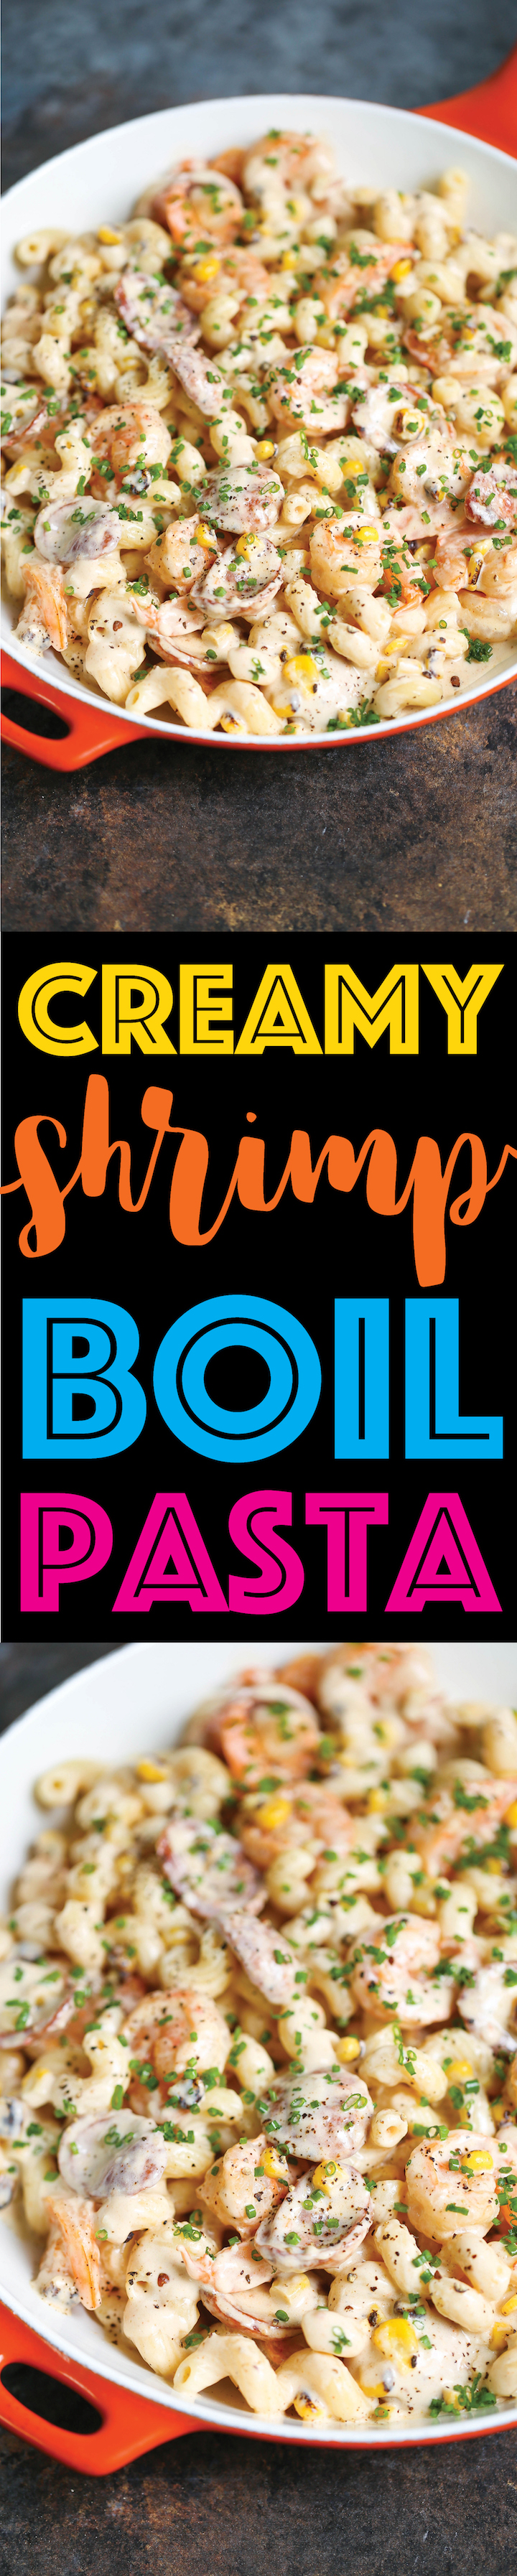 Slow Cooker Shrimp Boil - Damn Delicious